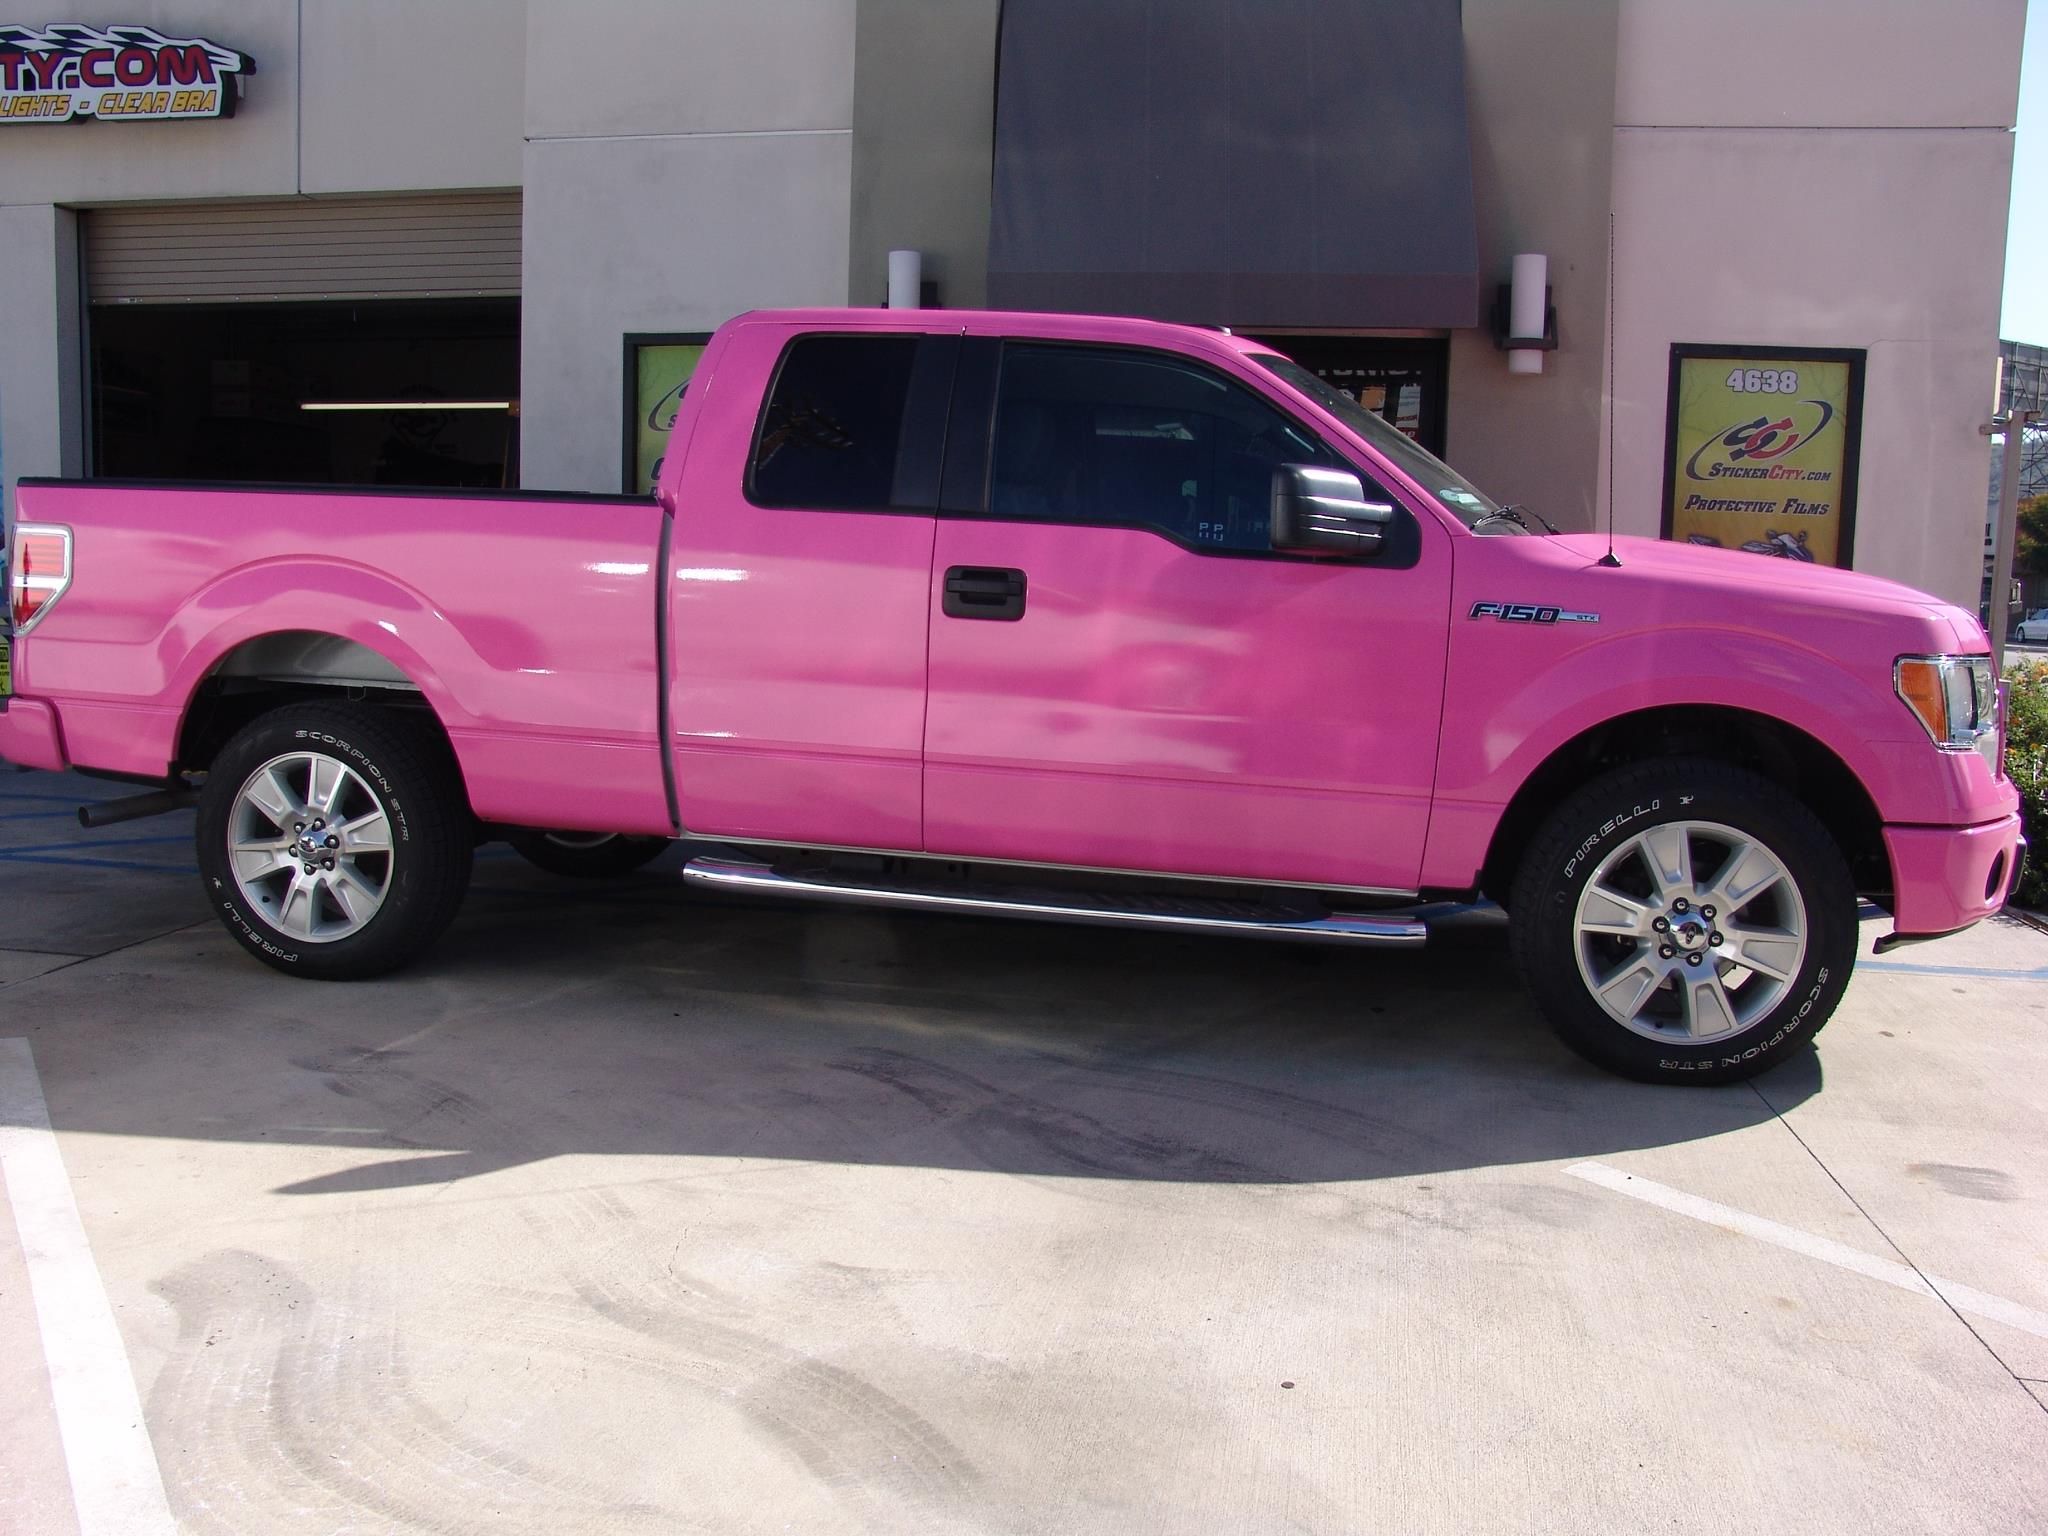 Pink truck, Pink chevy trucks, Pink chevy